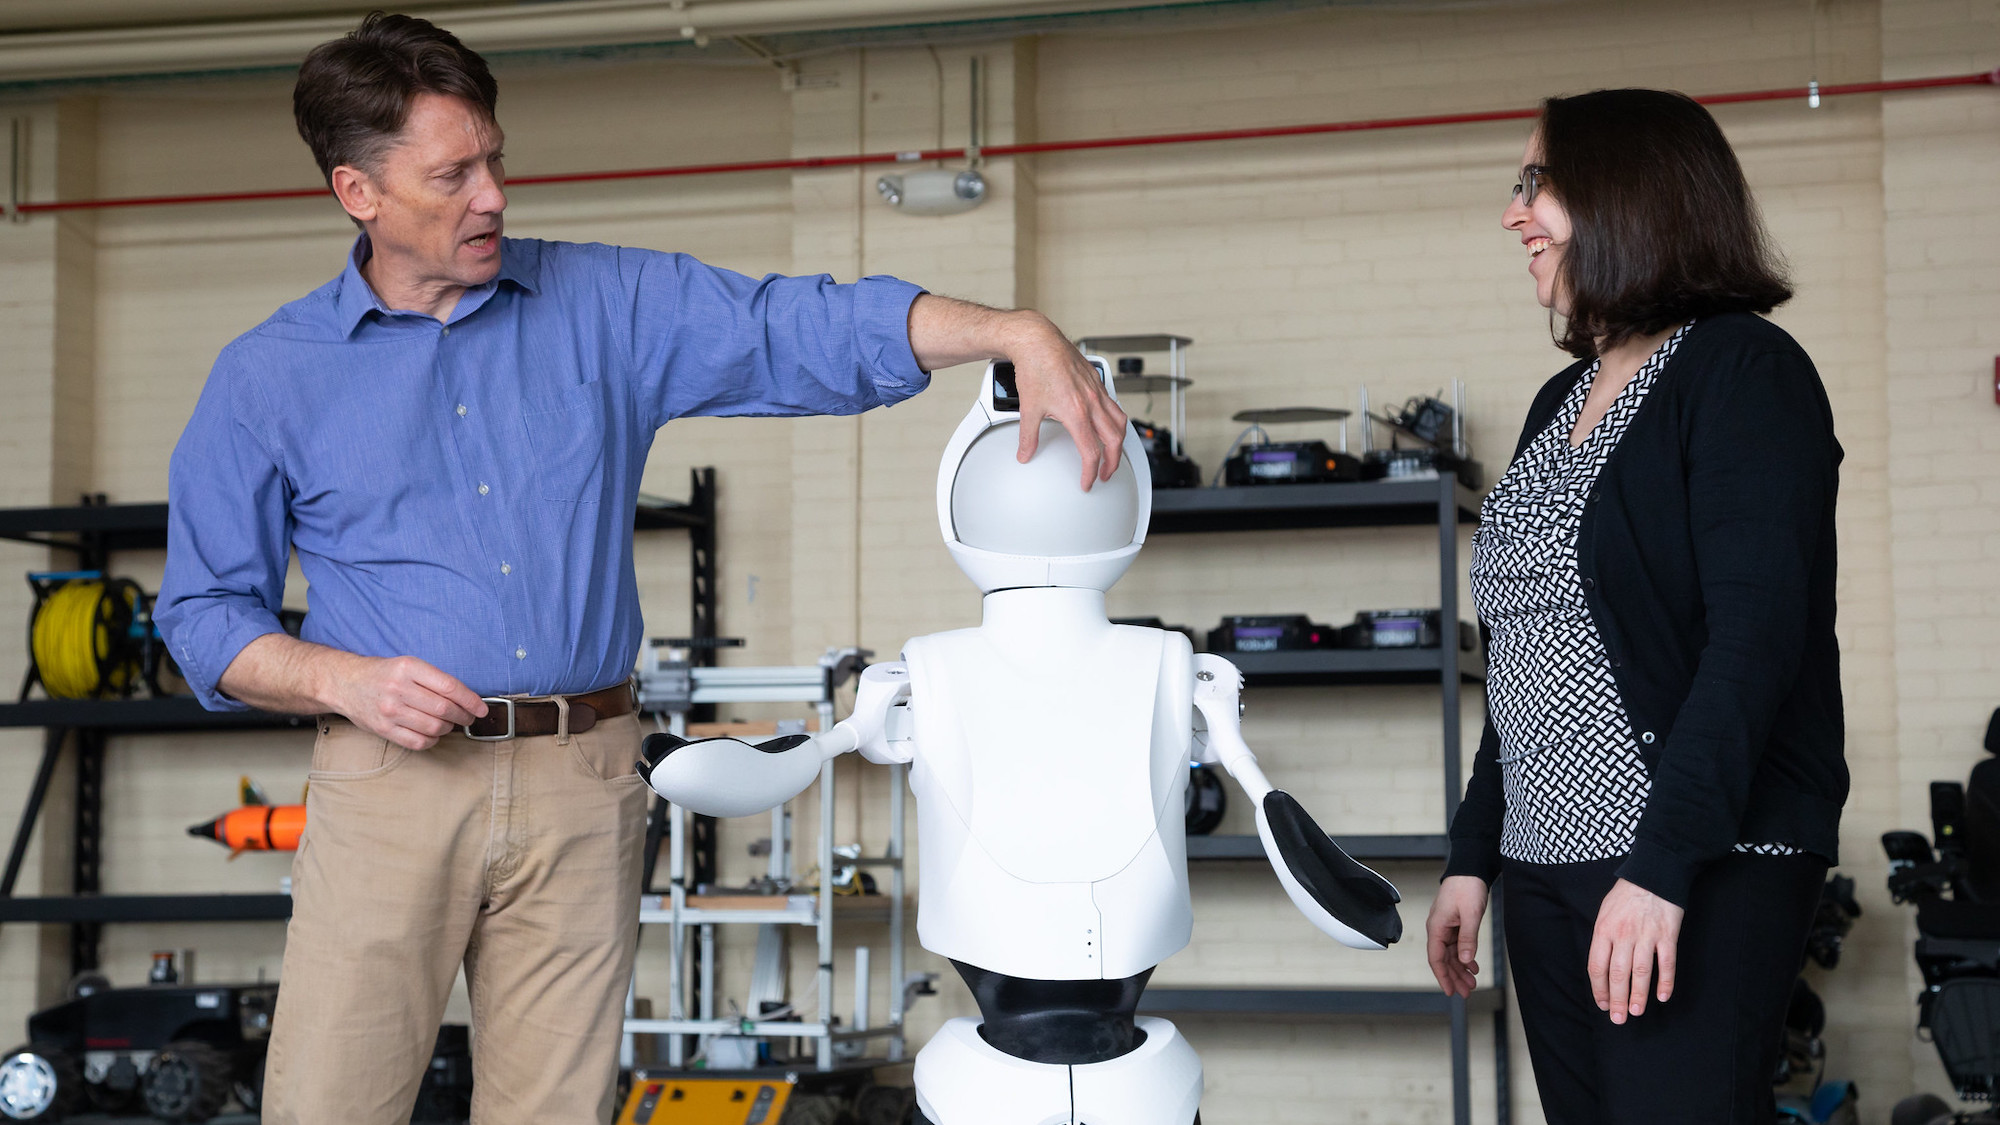 A fleet of humanoid, open-source robots could change robotics research